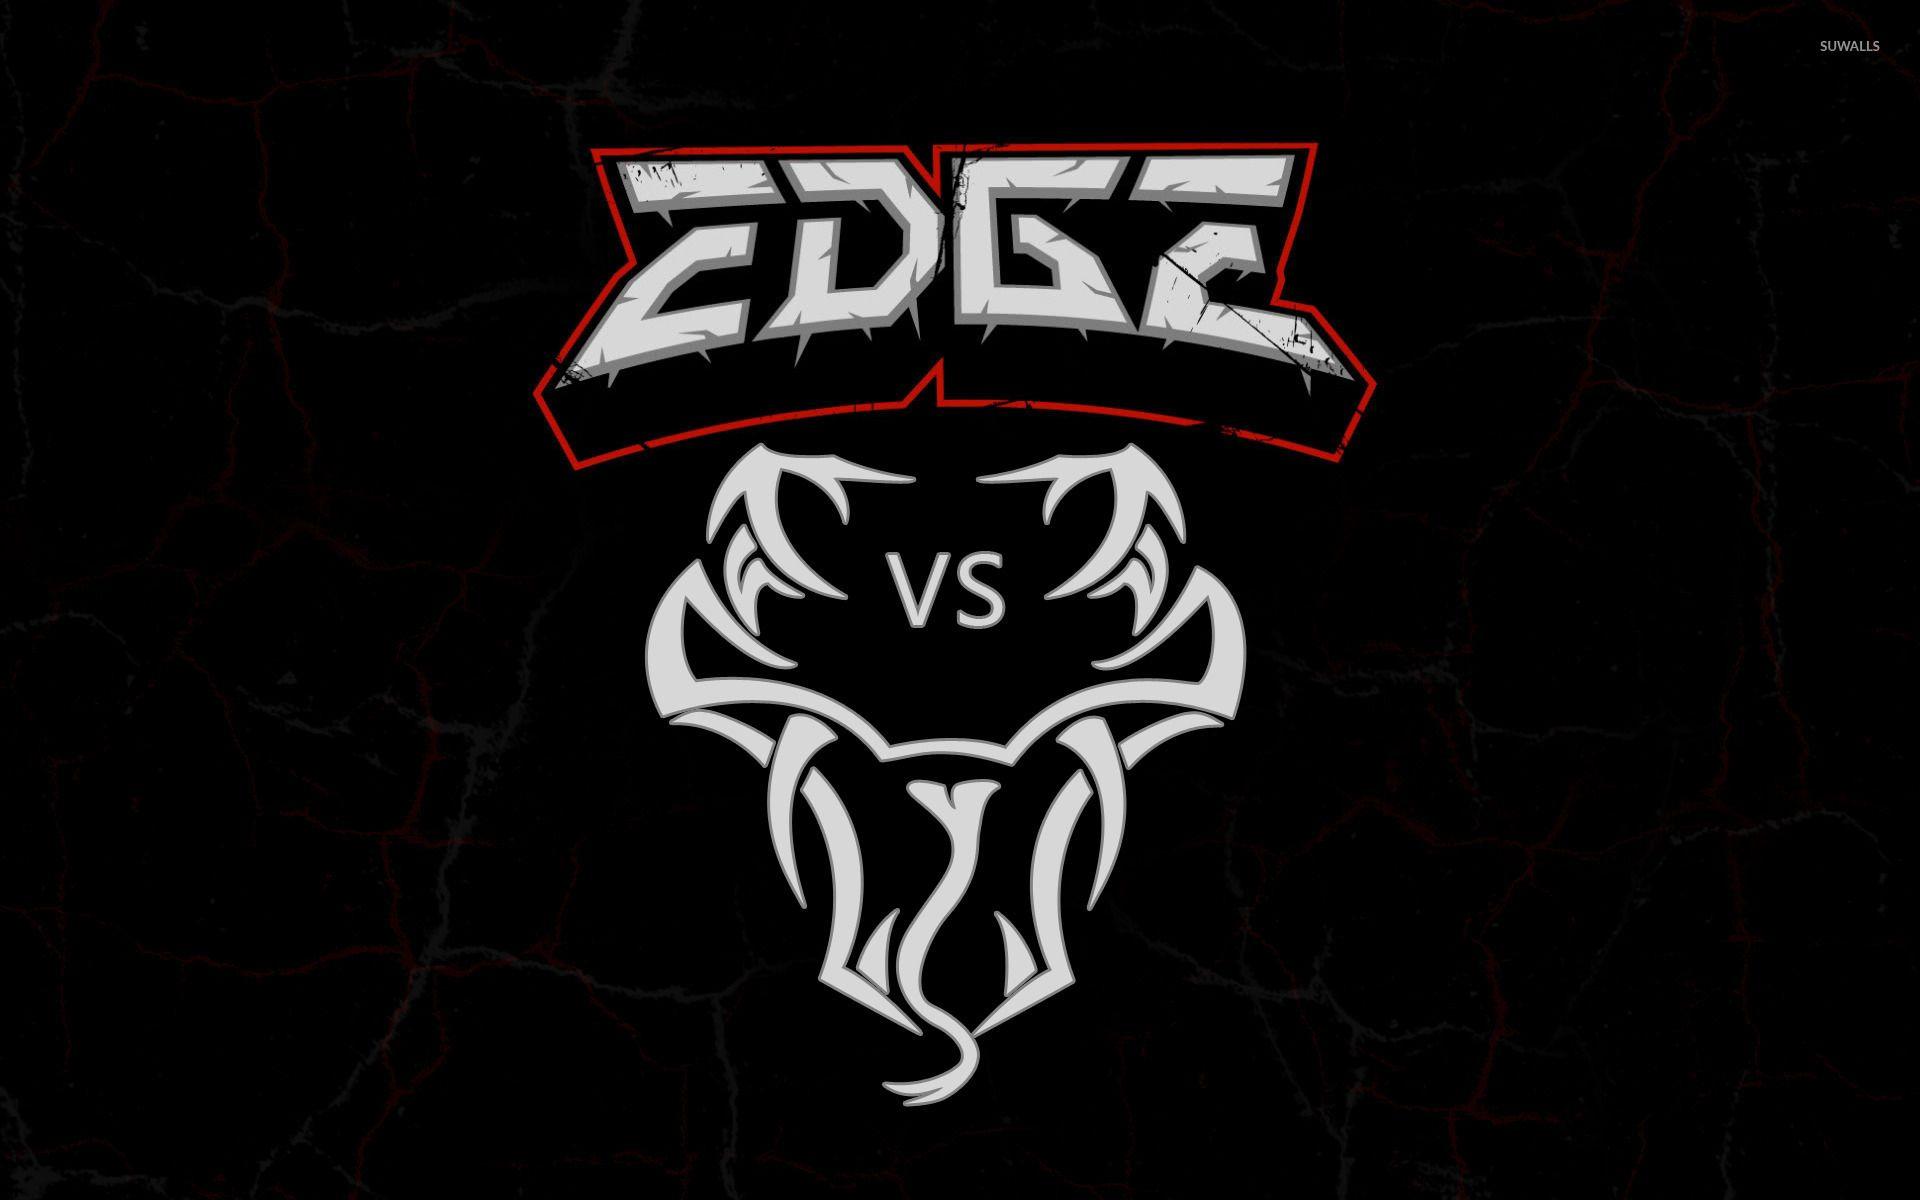 Edge vs Randy Orton logo wallpaper wallpaper